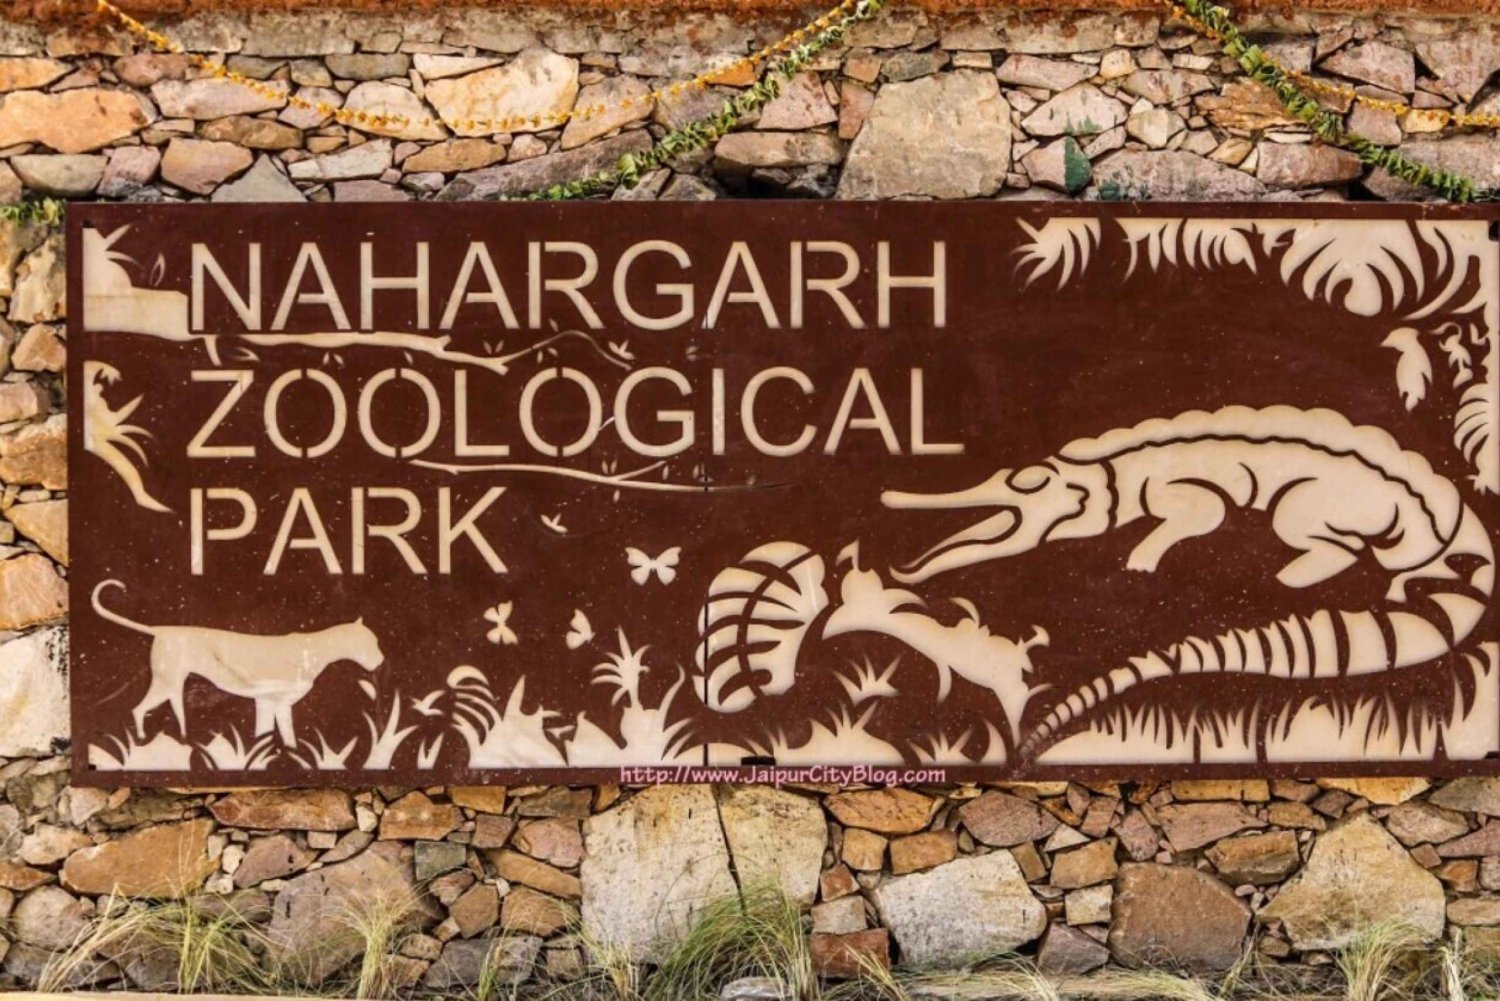 Skip The Line: Nahargarh Biological Park Tour, Jaipur